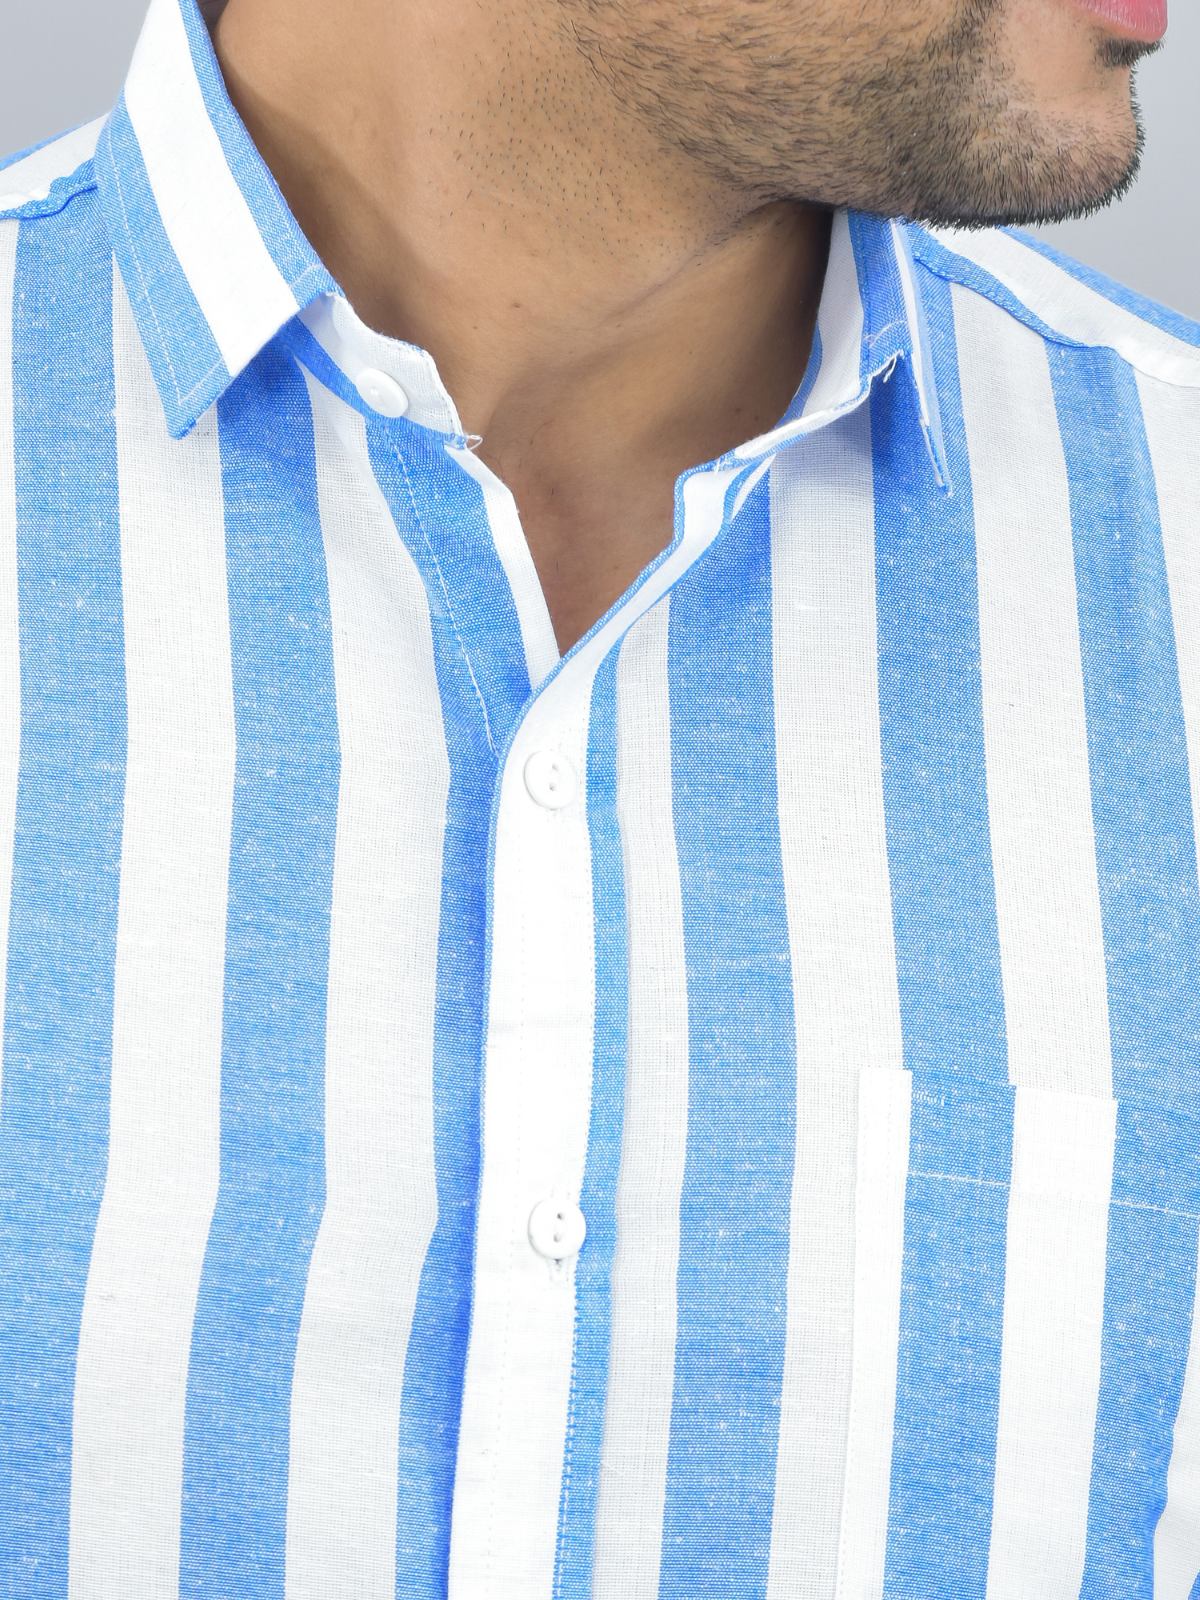 Mens Regular Fit Blue Striped Half Sleeves Cotton Casual Shirt